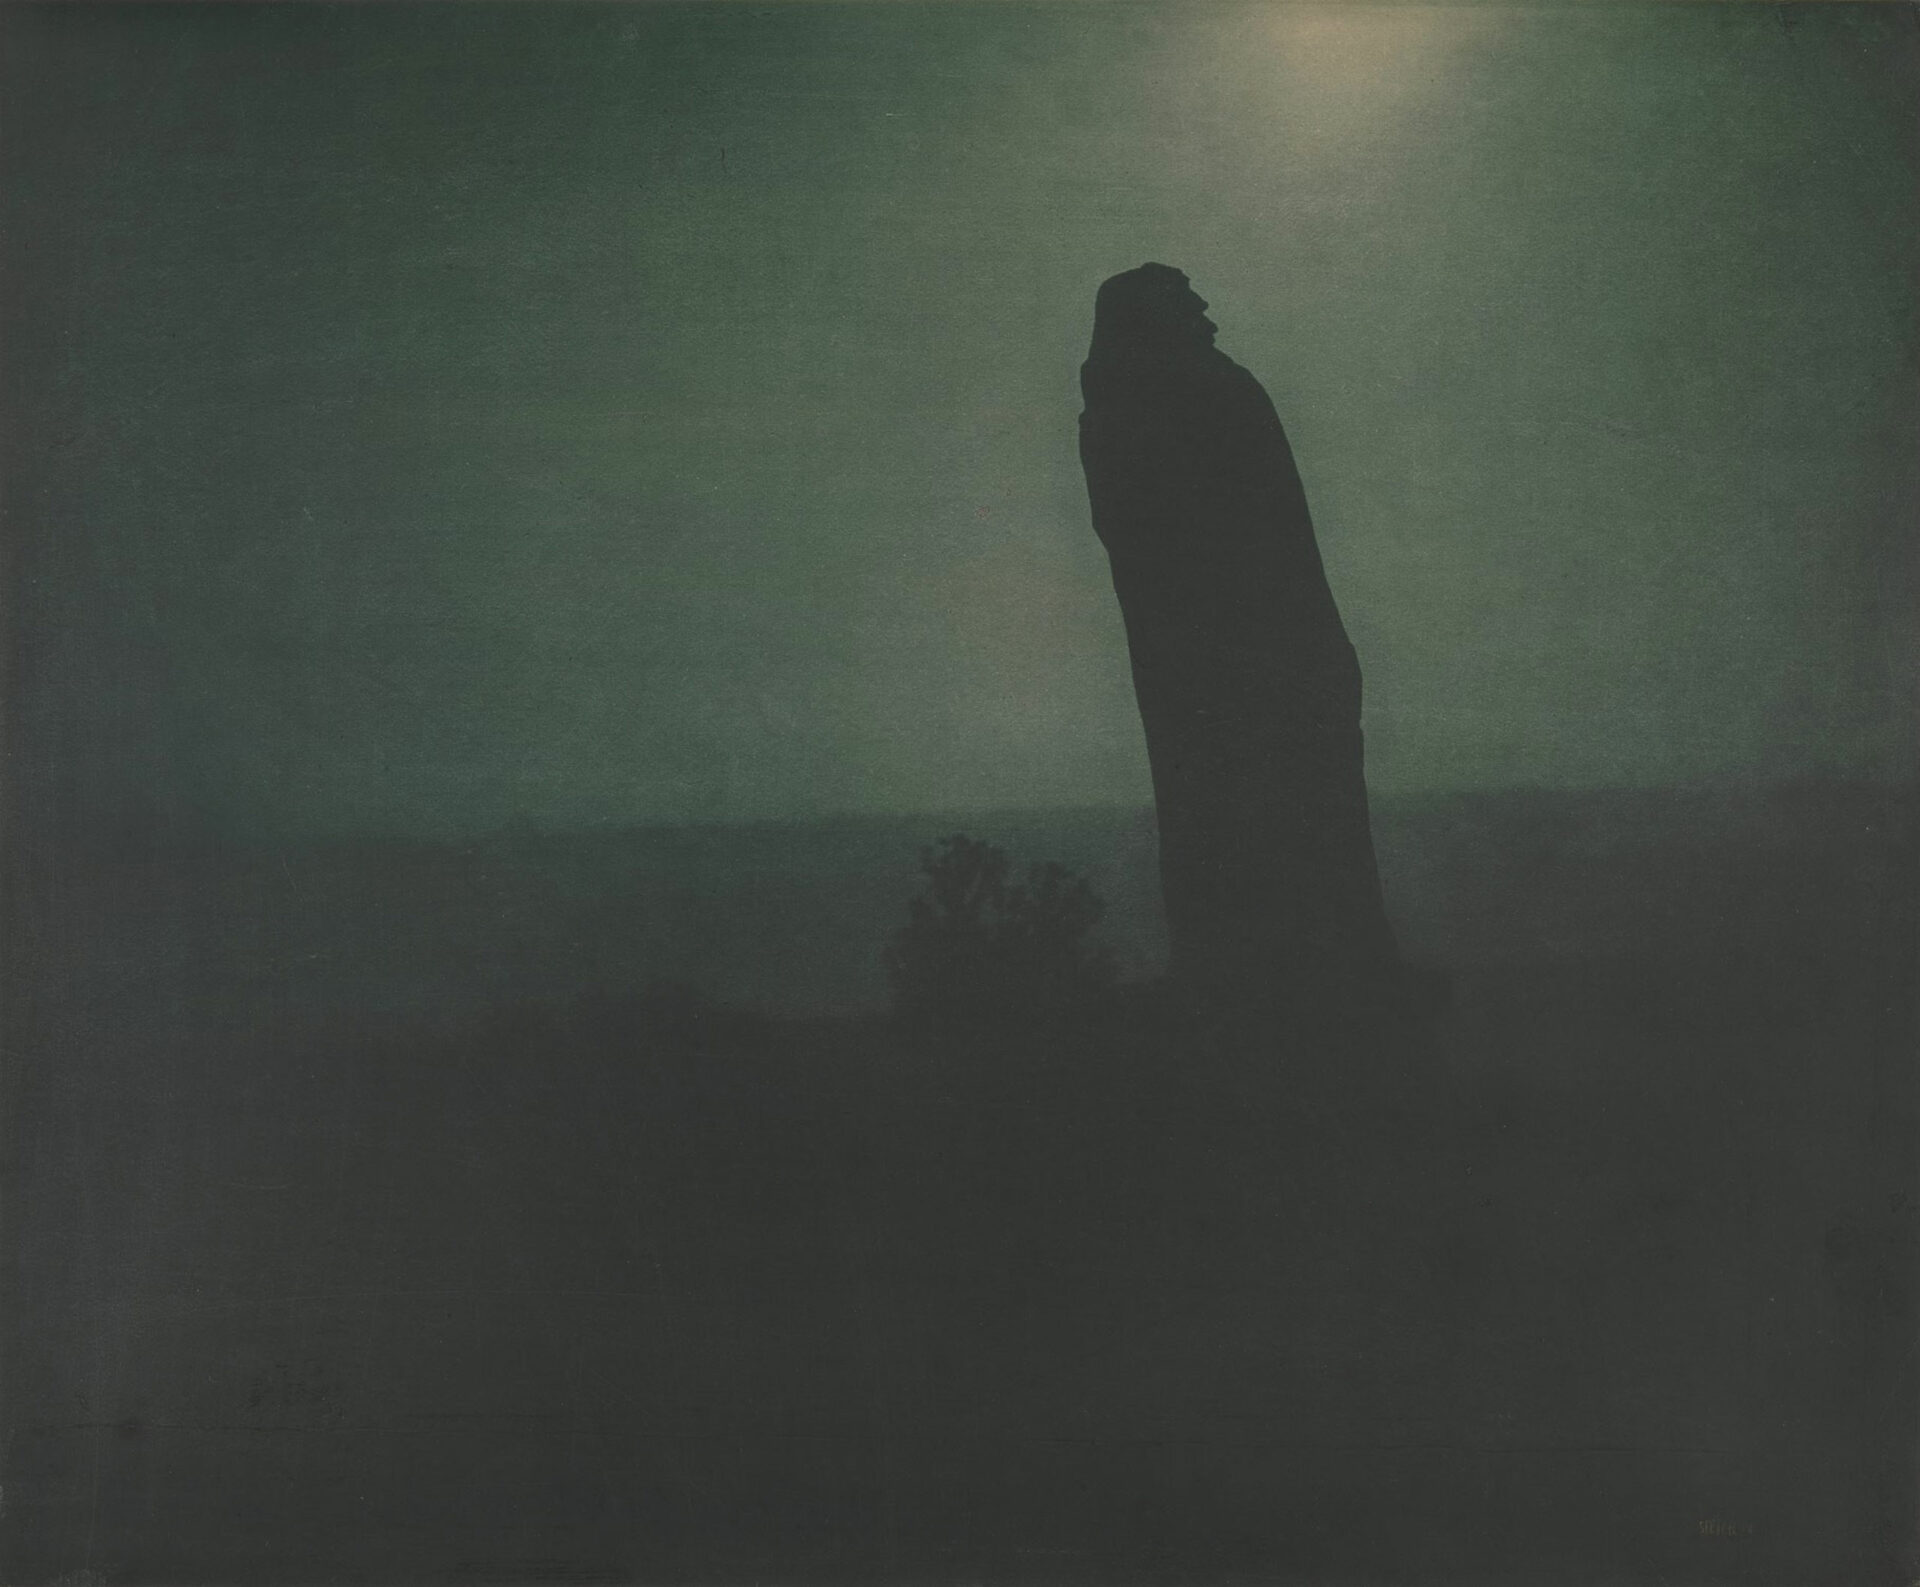 Edward J. Steichen, Auguste Rodins „Honoré de Balzac“. The Silhouette – 4 A.M., Meudon, 1908, The Metropolitan Museum of Art, New York